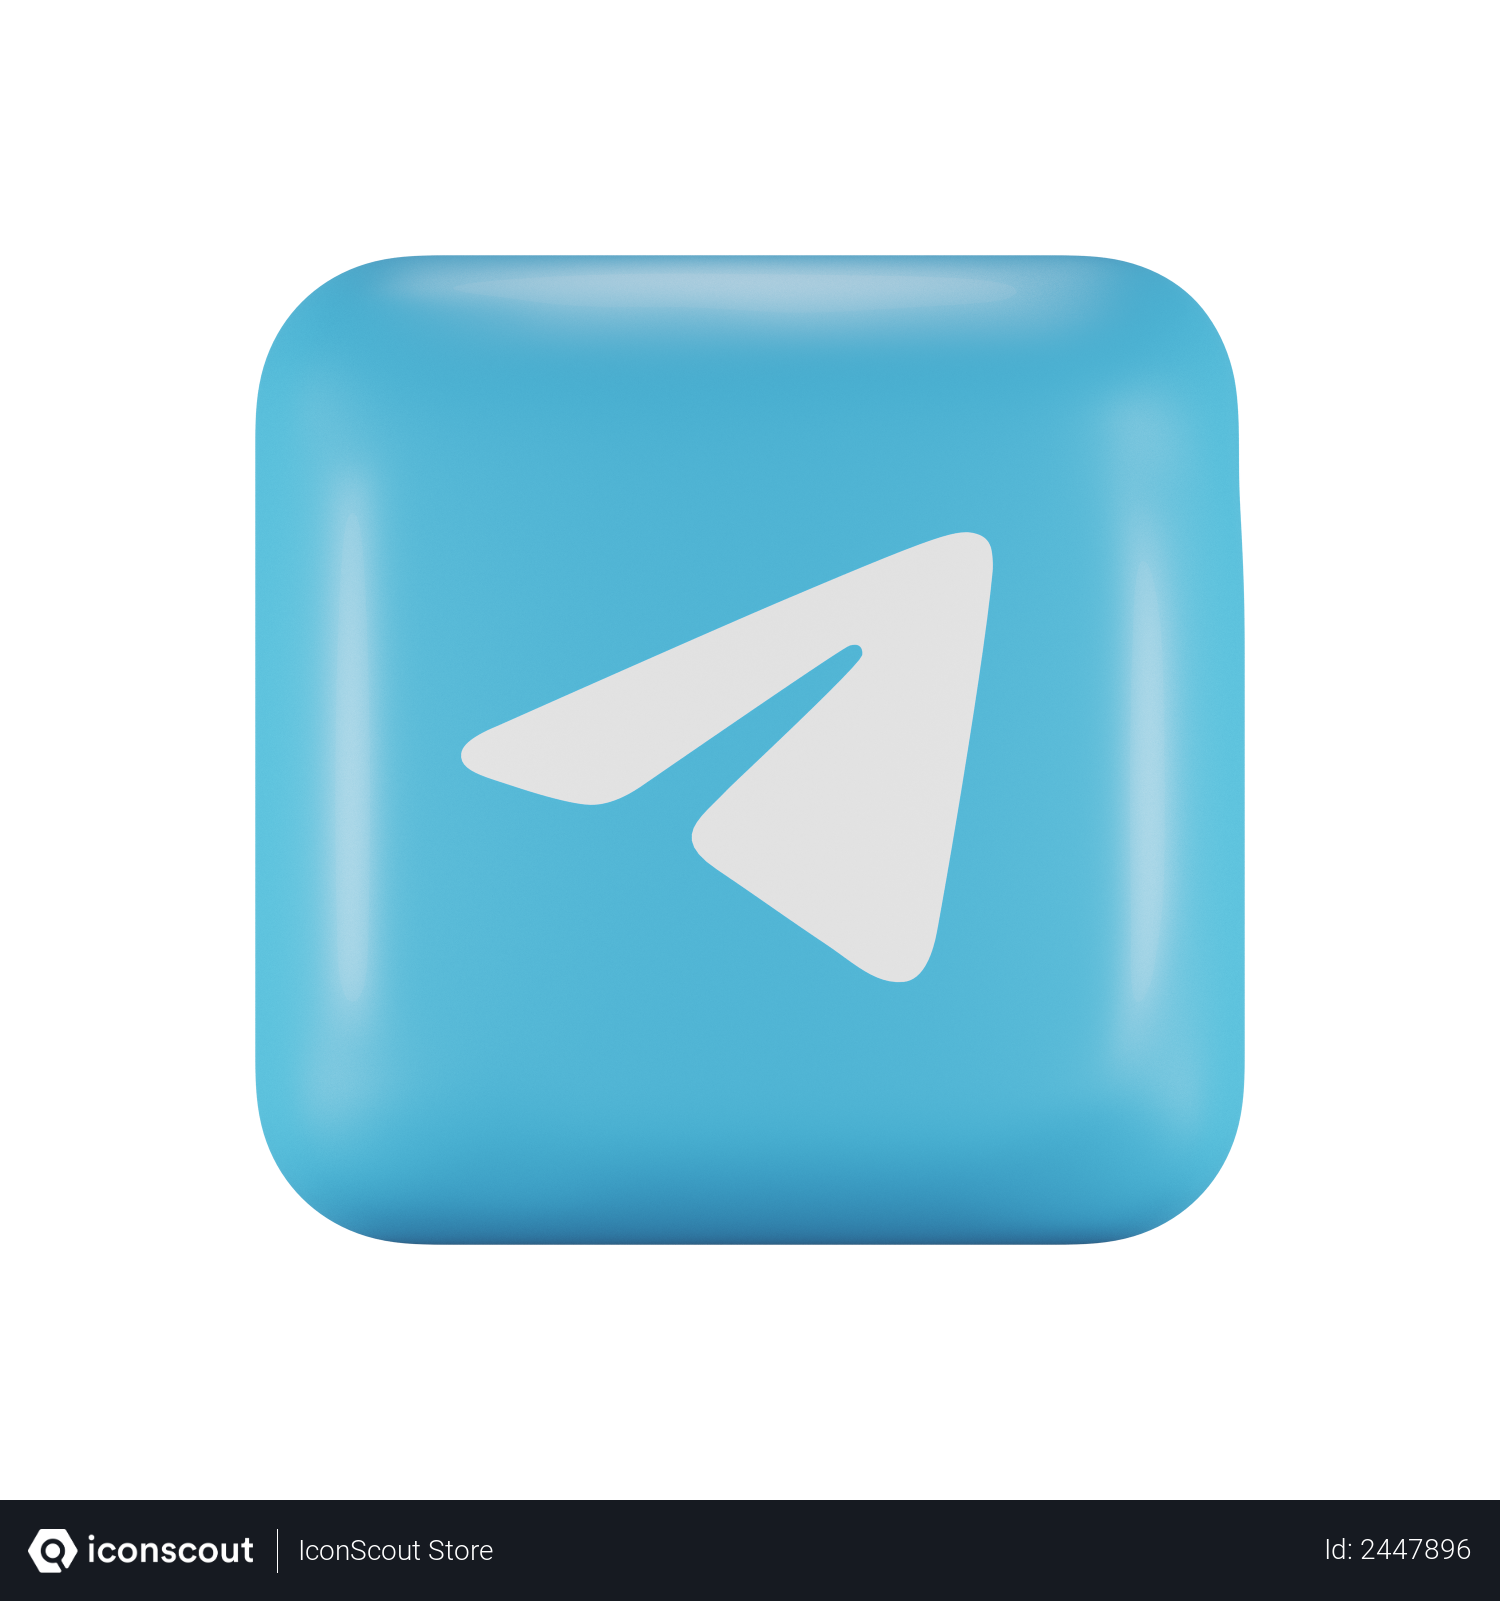 Telegram Logo PNG Transparent & SVG Vector - Freebie Supply